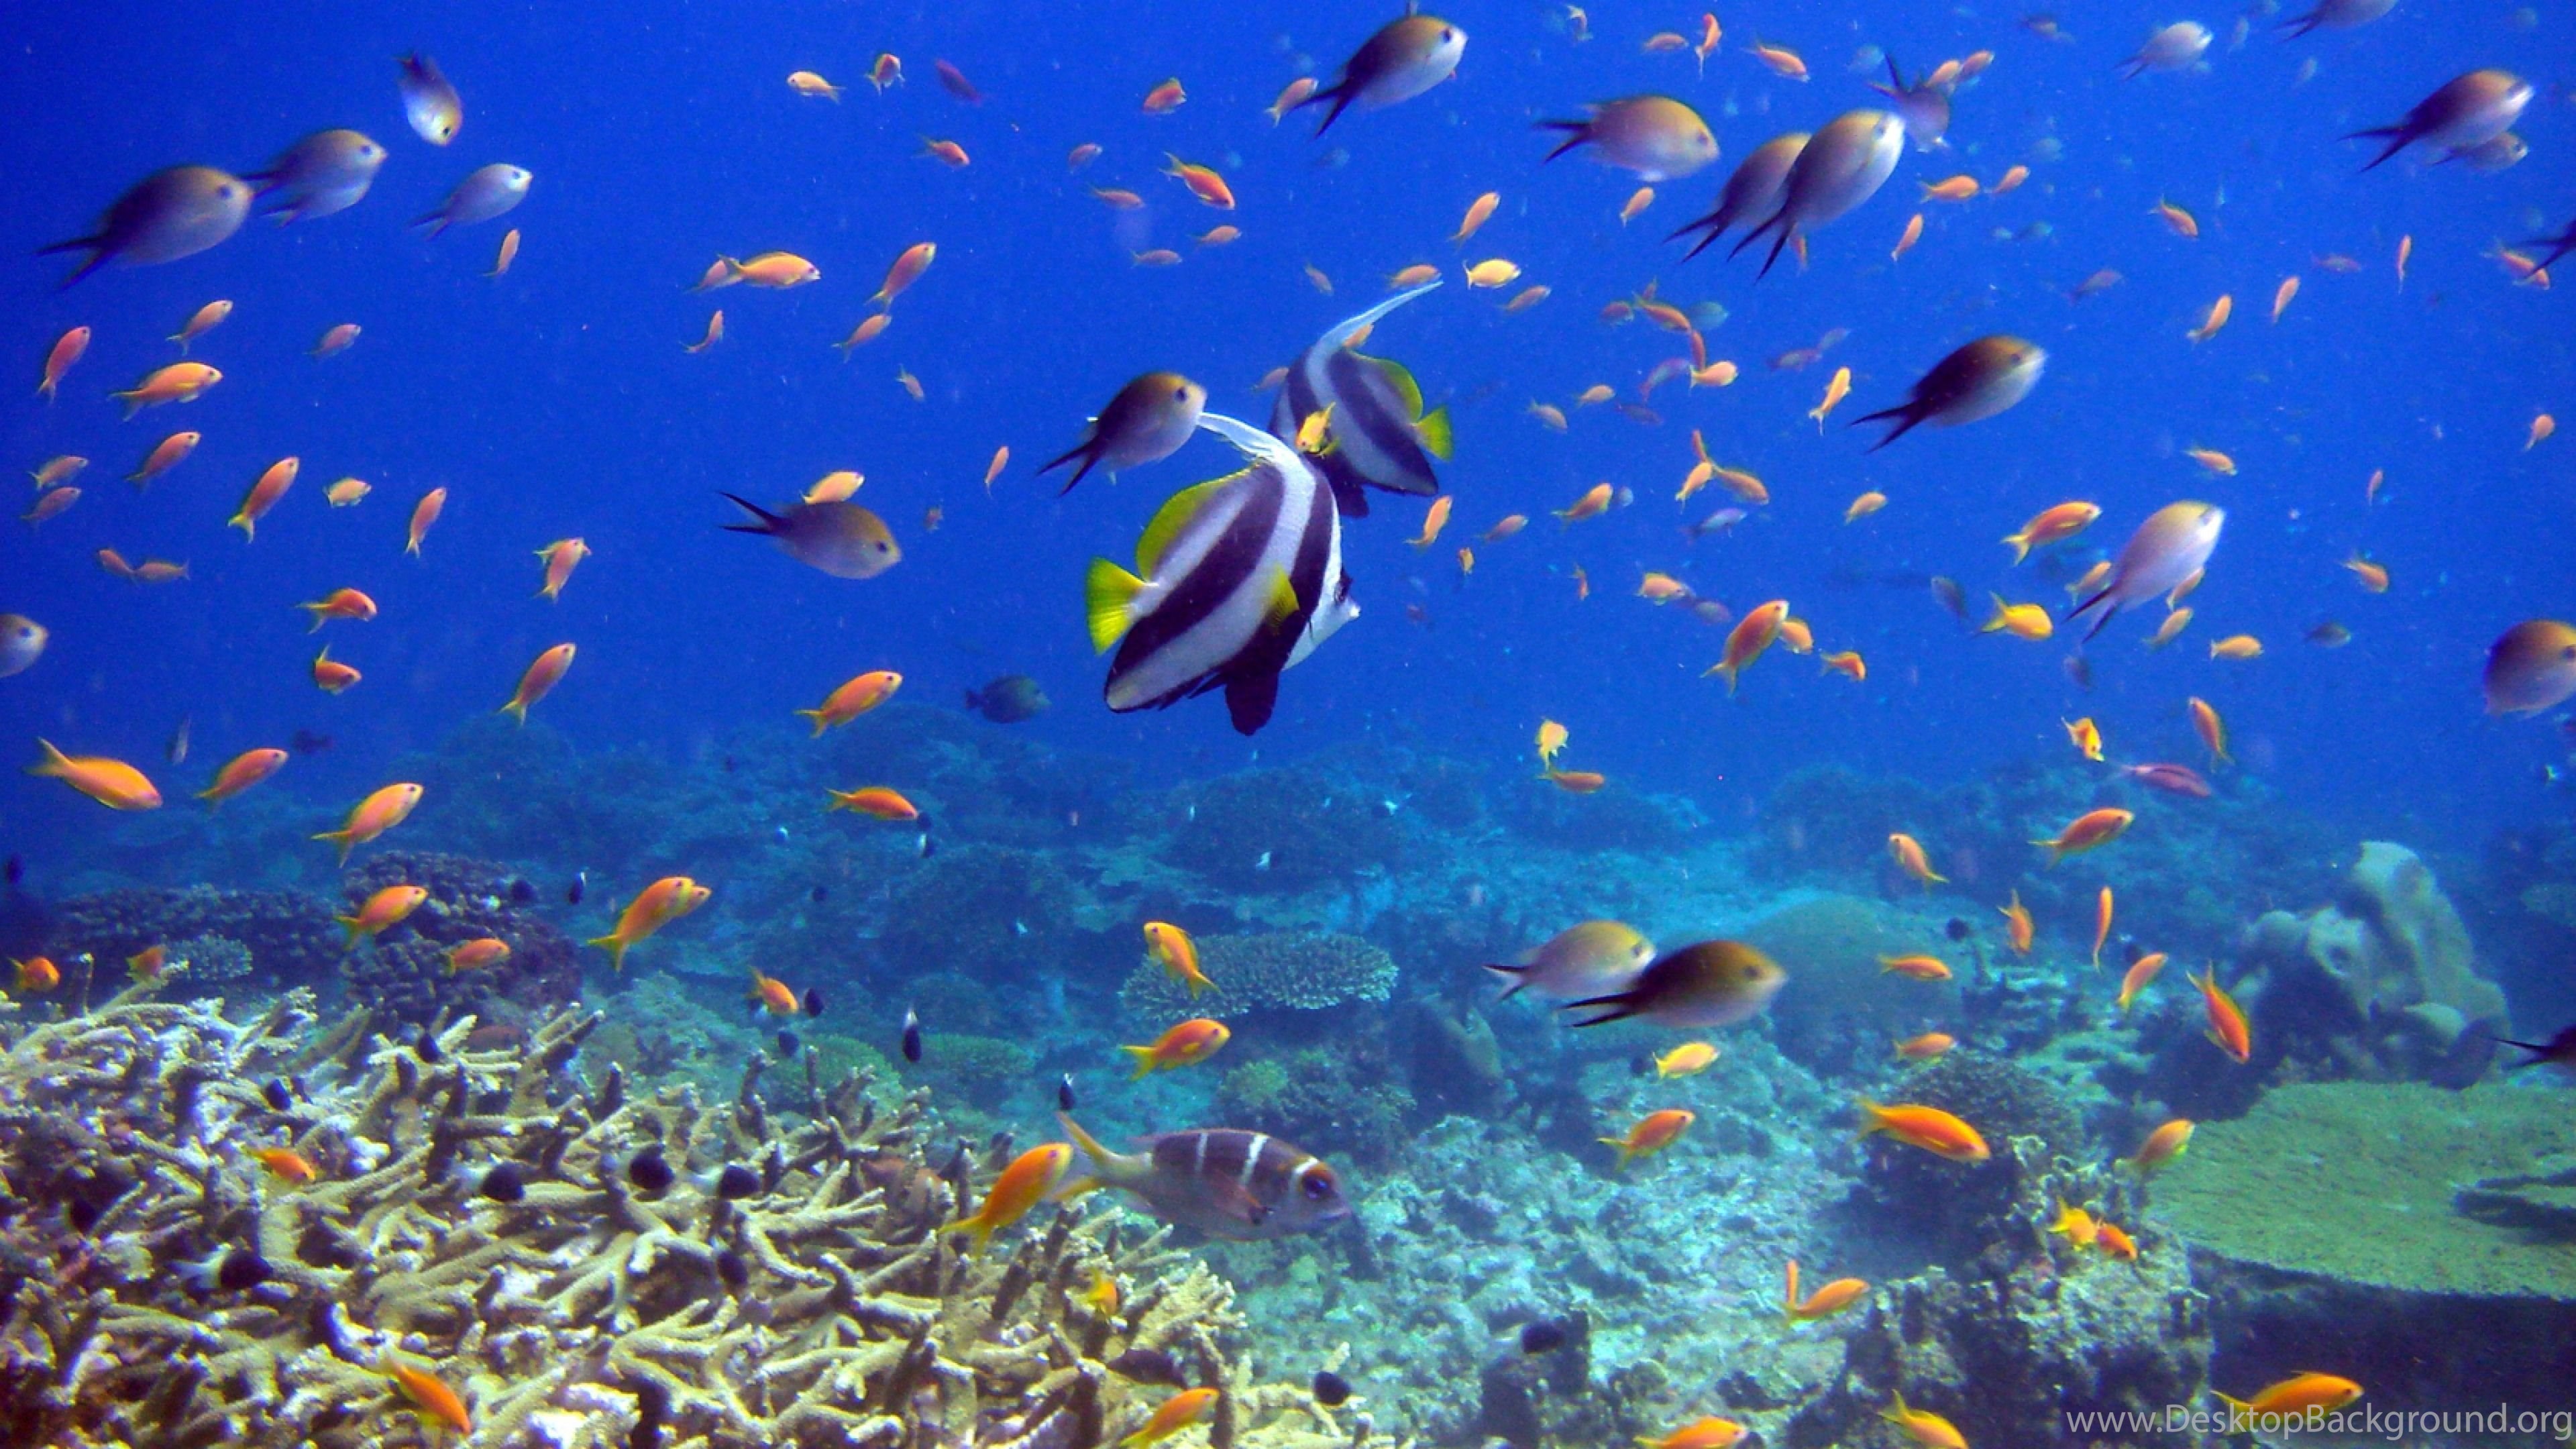 Download Wallpaper 3840x2160 Fish, Coral, Underwater 4K Ultra HD. Desktop Background